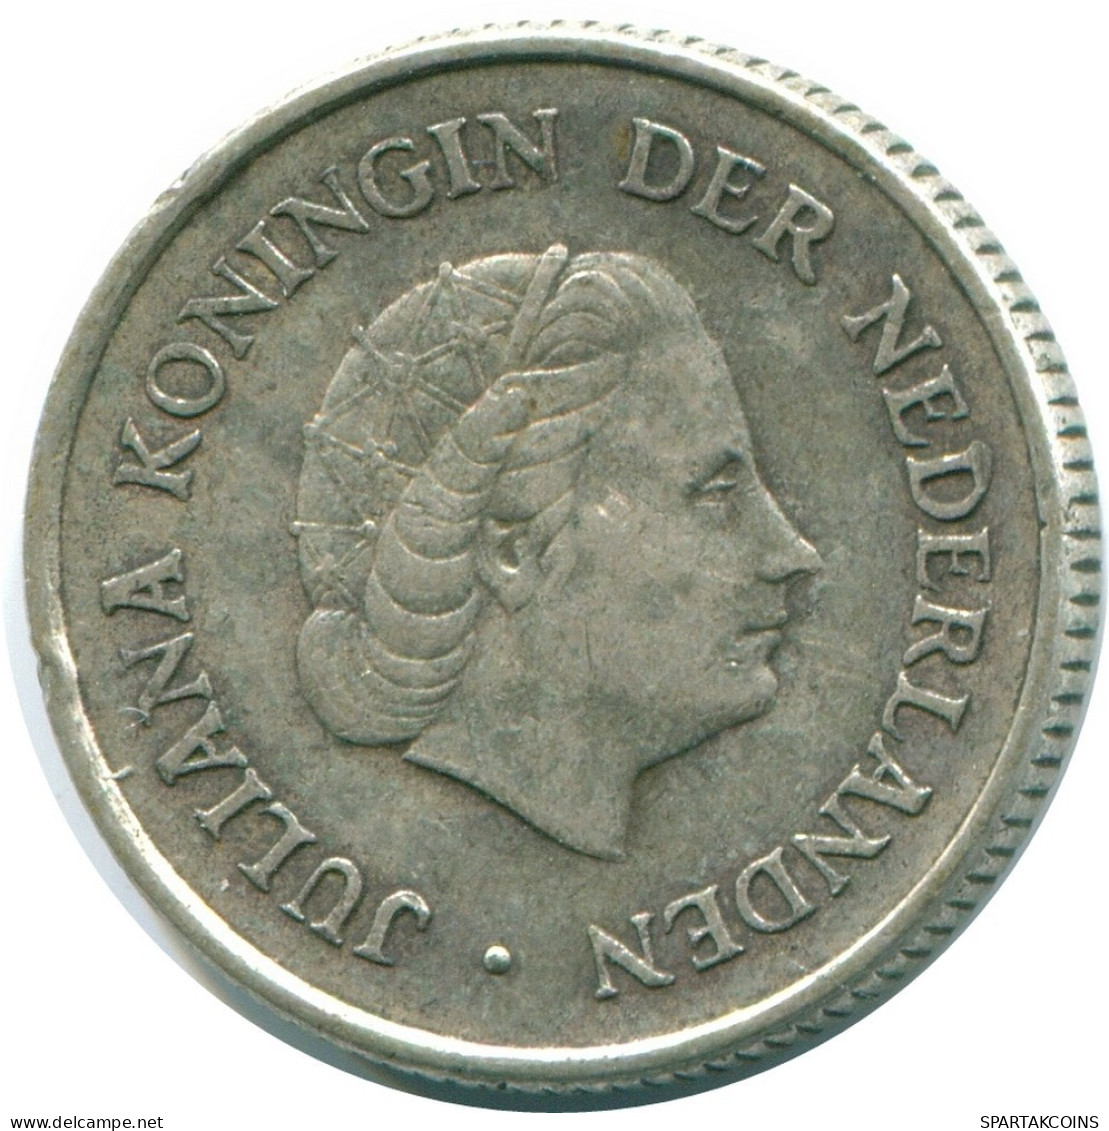 1/4 GULDEN 1967 NETHERLANDS ANTILLES SILVER Colonial Coin #NL11585.4.U.A - Antilles Néerlandaises